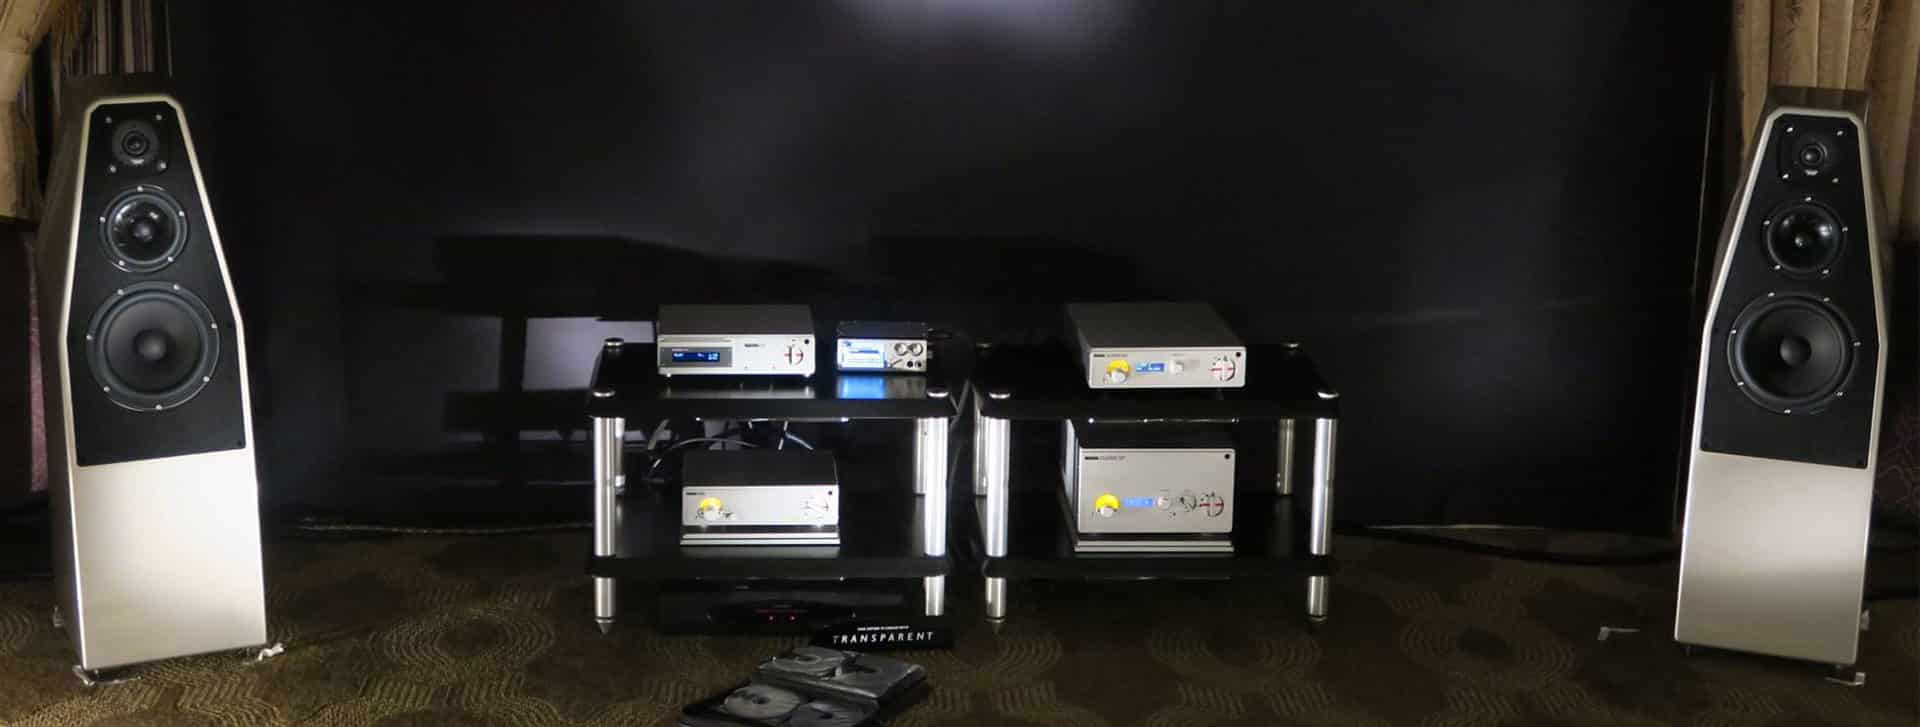 NAGRA CLASSIC DAC stellt Digital-Analog-Wandler CD Seven AMP PSU Wilson